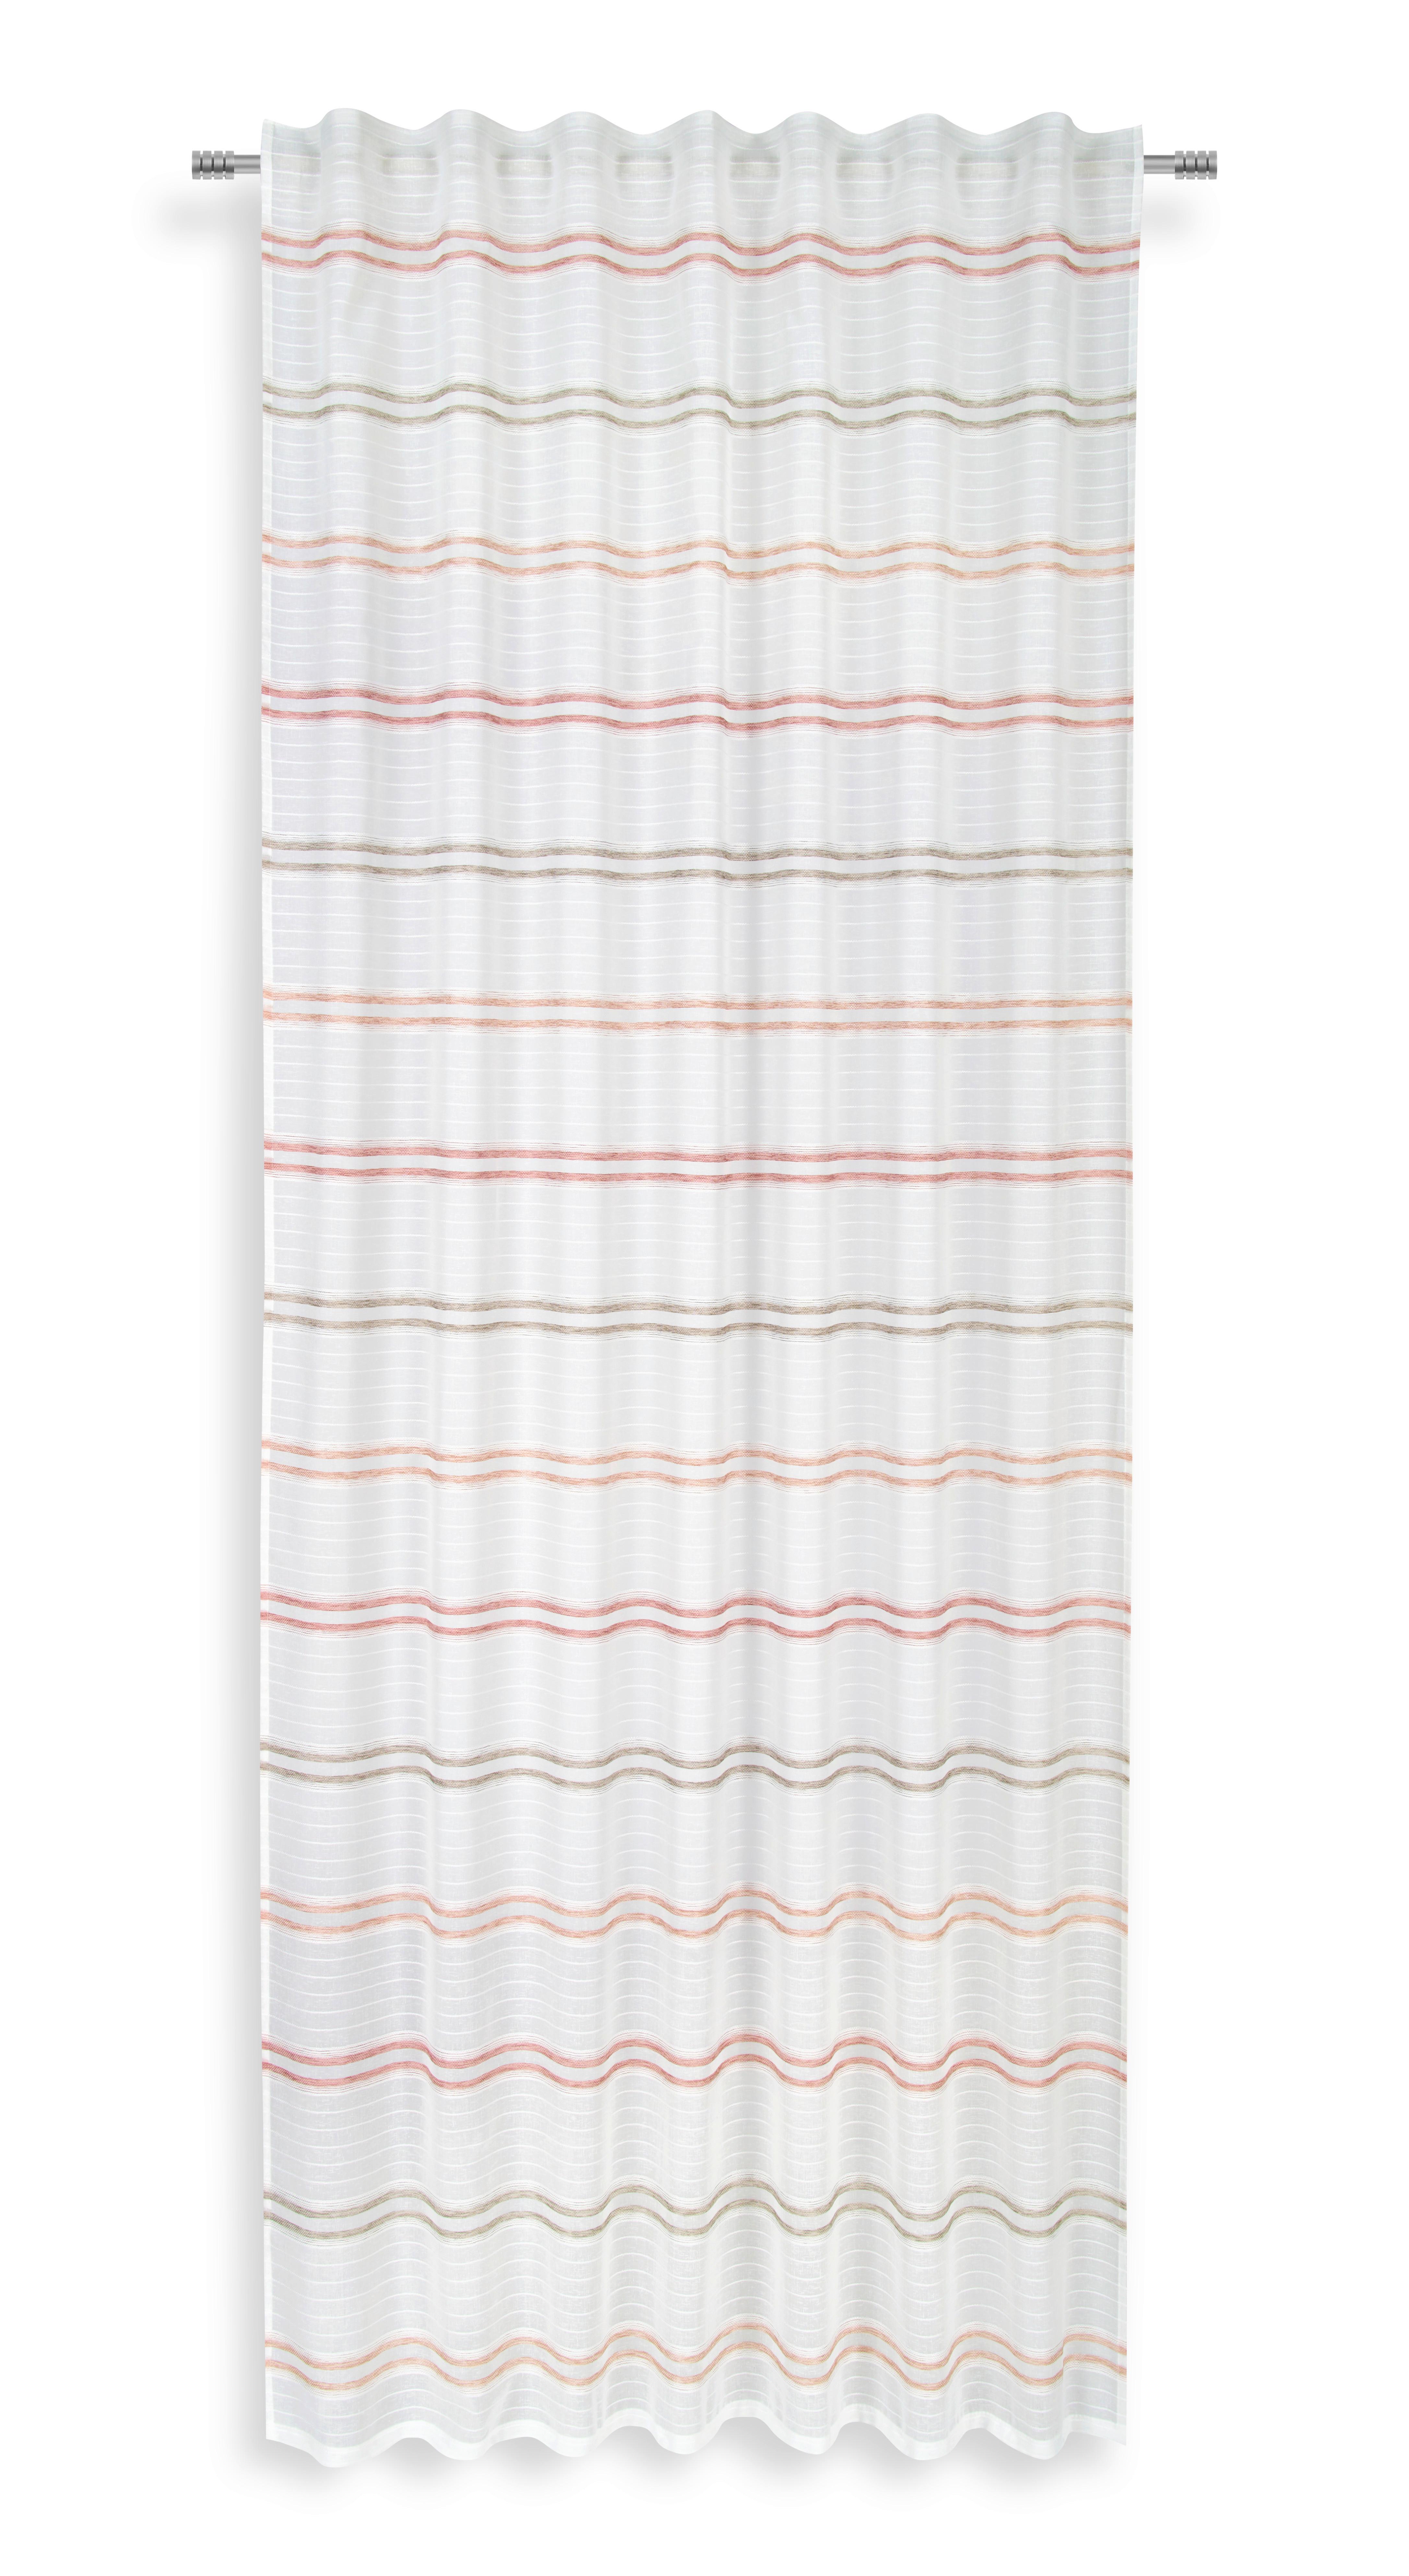 Vorhang mit Band Elli 140x245 cm Weiß/Rose/Taupe - Taupe/Rosa, MODERN, Textil (140/245cm) - Luca Bessoni